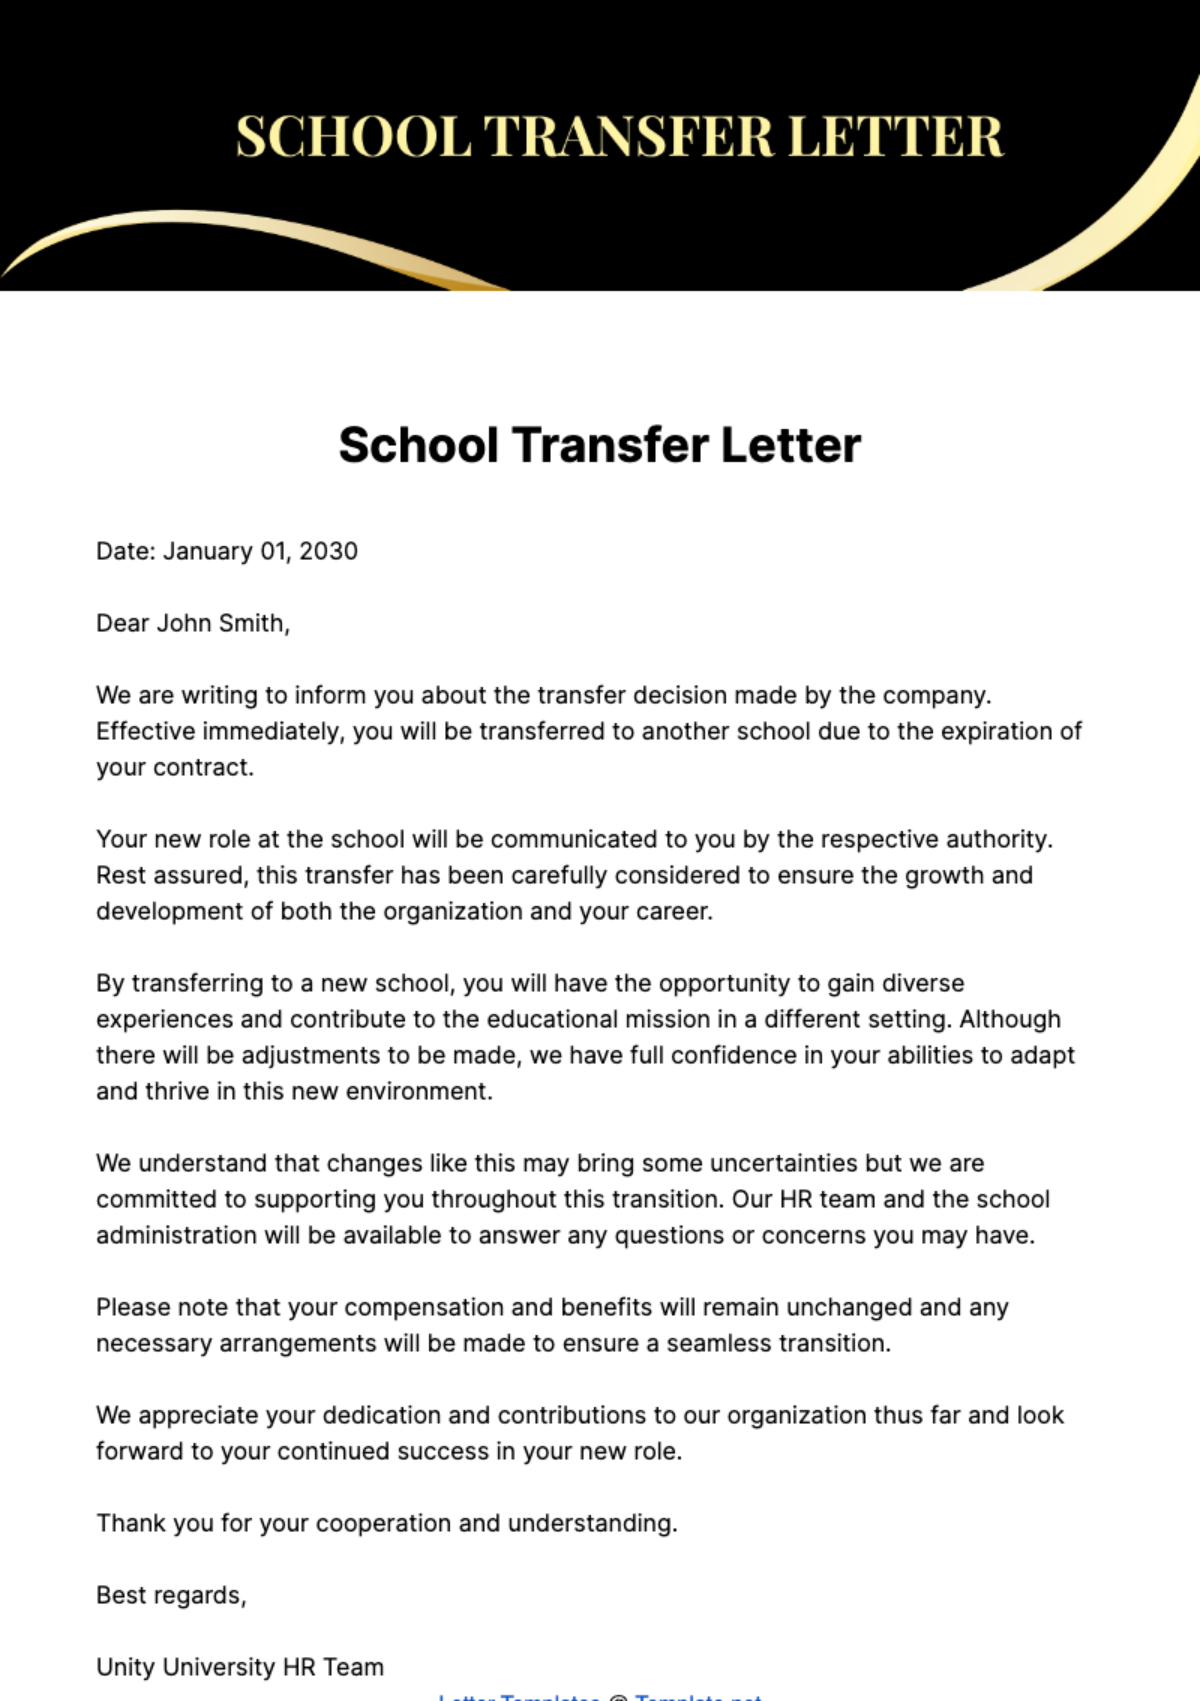 Free School Transfer Letter Template